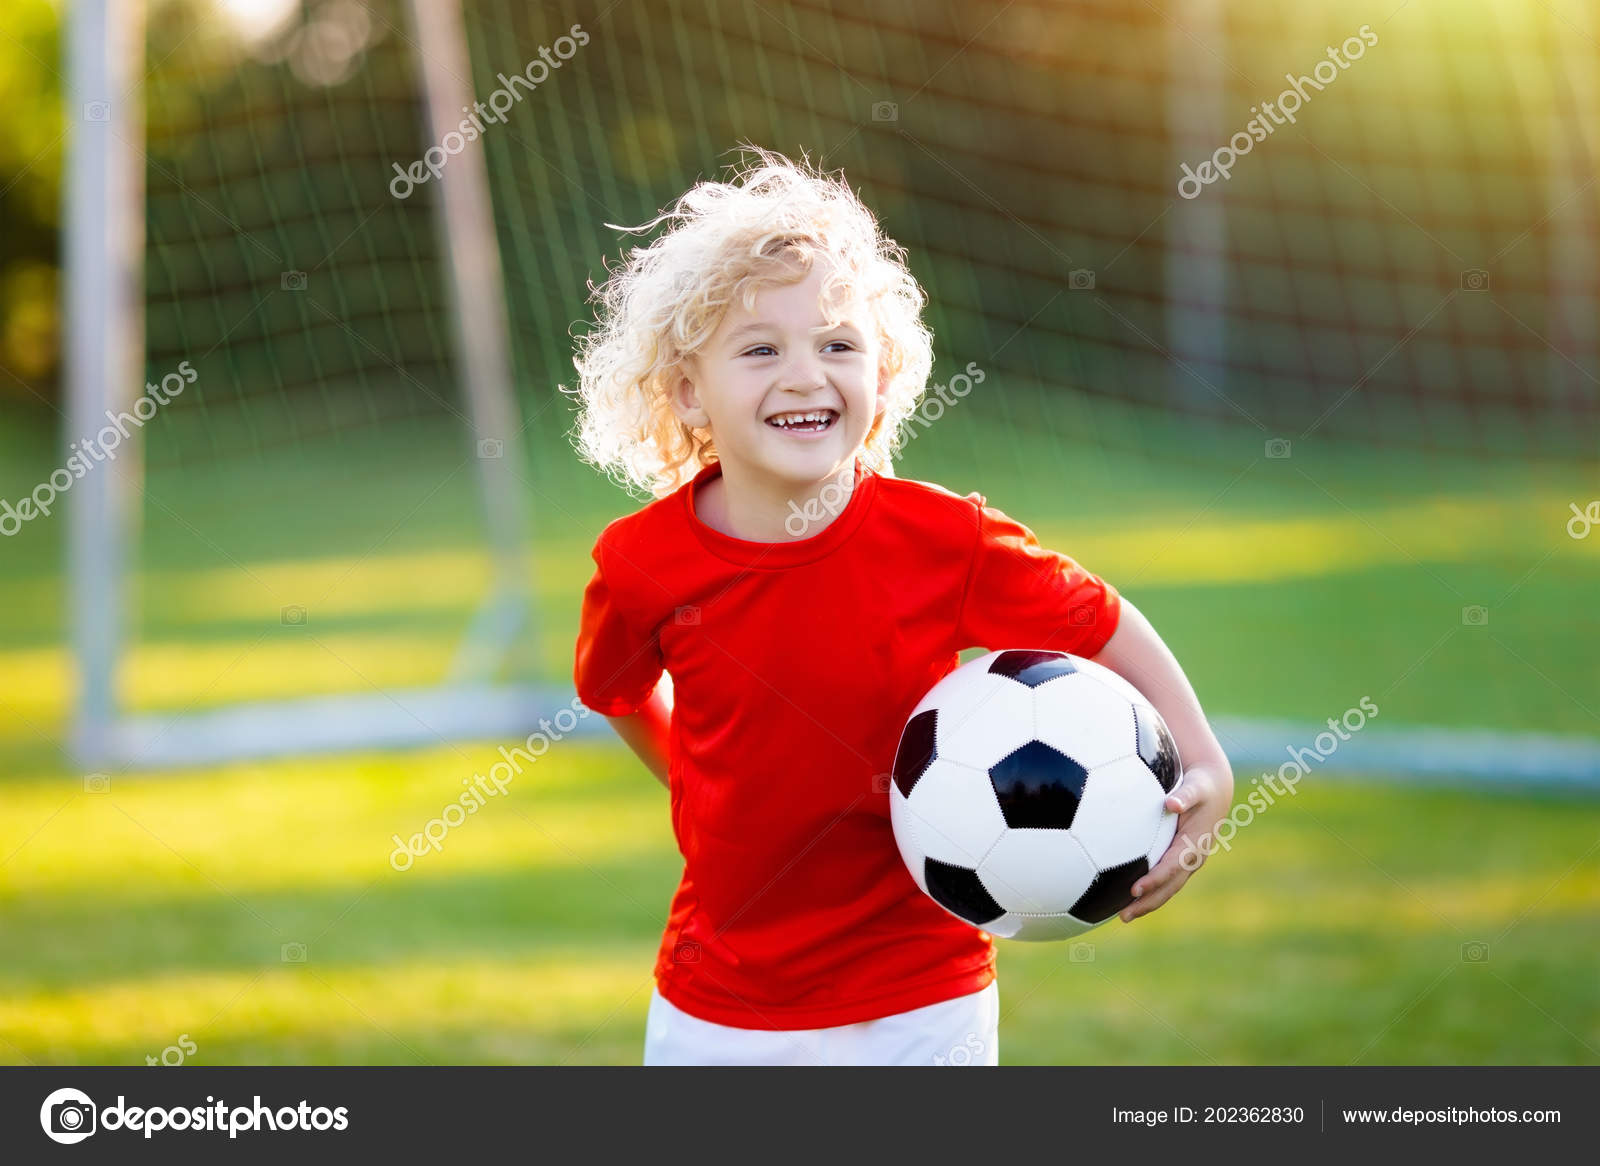 Kids Play Football Outdoor Field Children Score Goal Soccer Game Stock Photo By C Famveldman 236